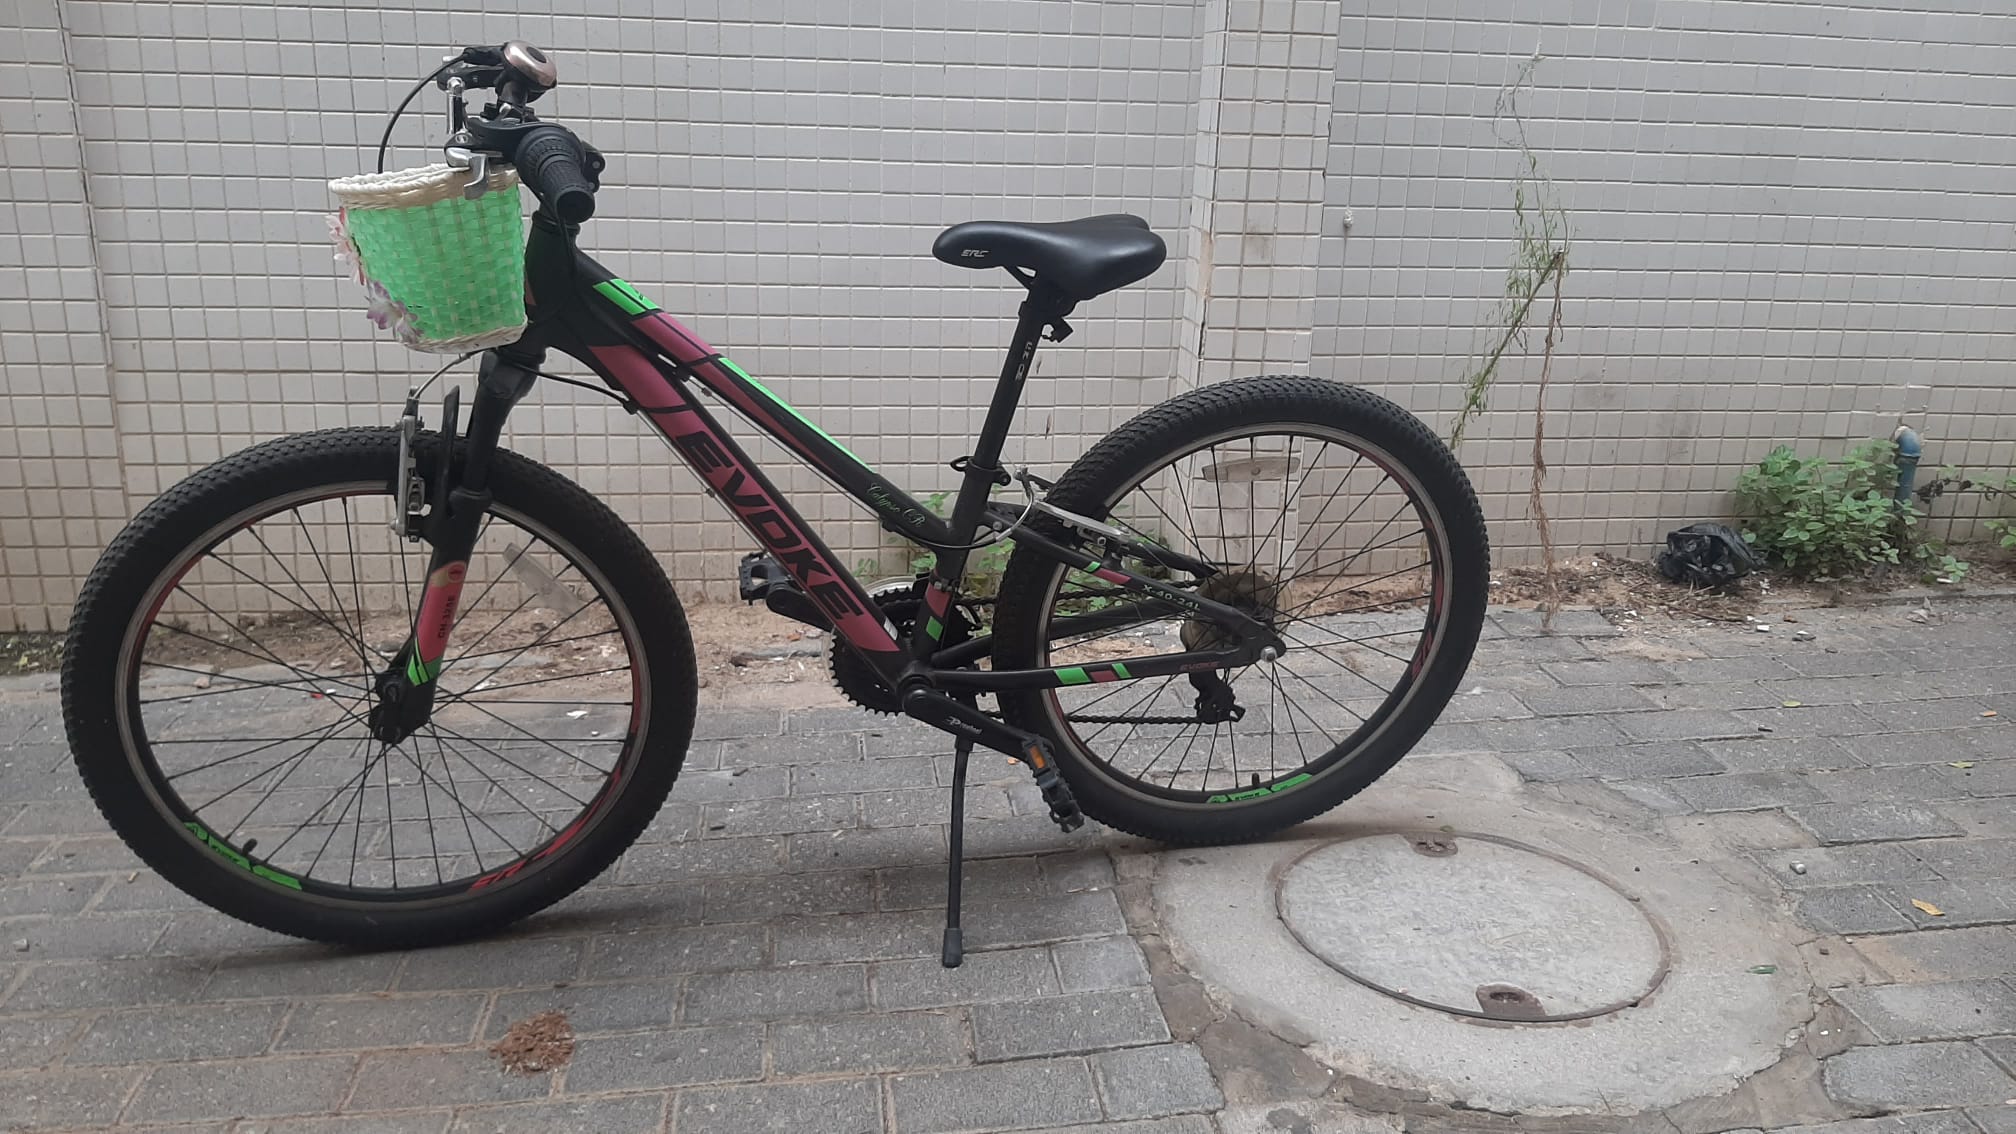 stay tuition fee Australian person Evoke X-40 24" Girls למכירה בתל אביב 600 שח | אופניים - אופני ילדים | לוח יד  שניה הומלס